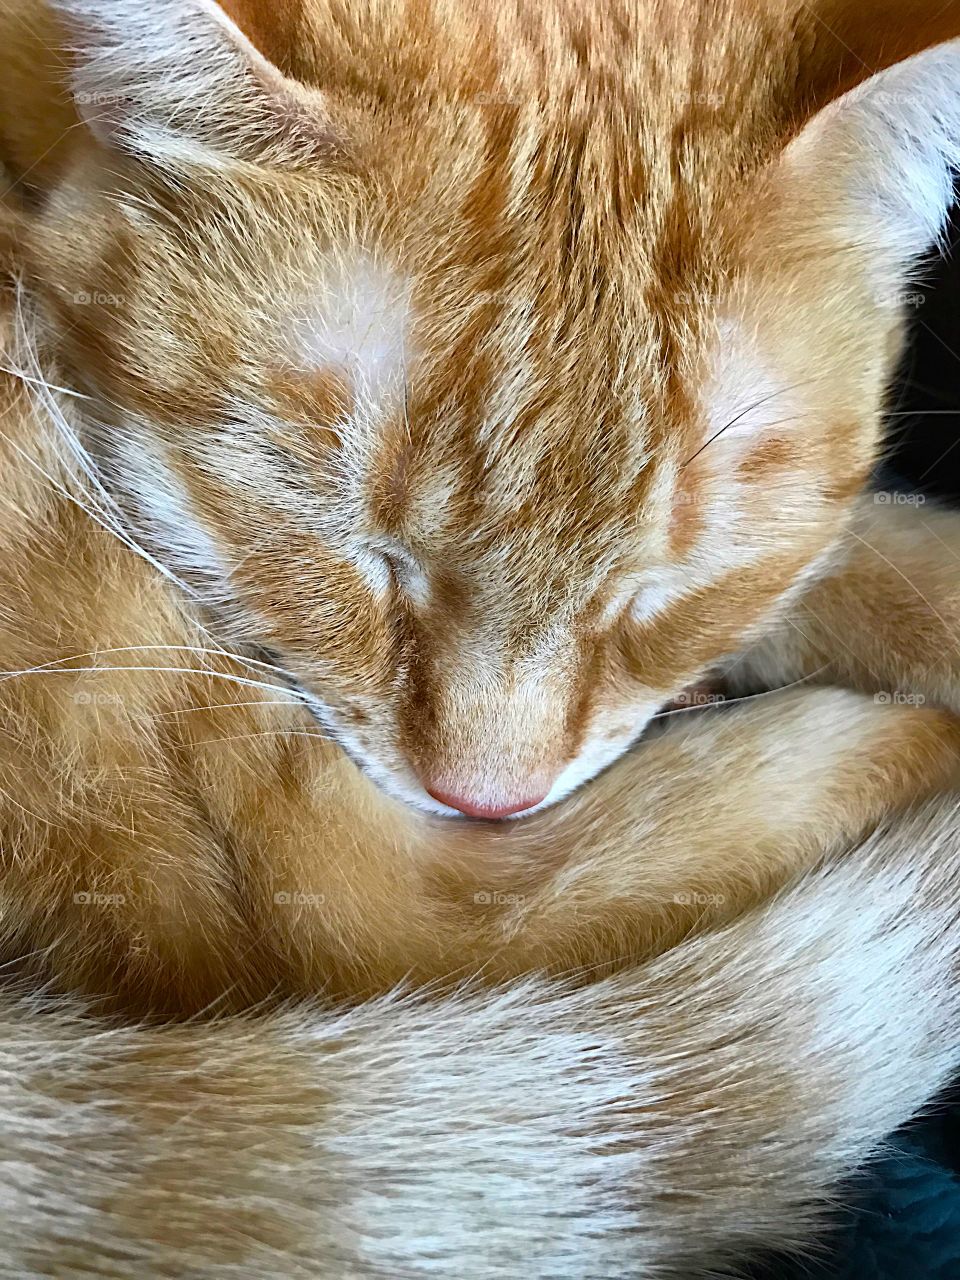 Sleeping orange tabby cat